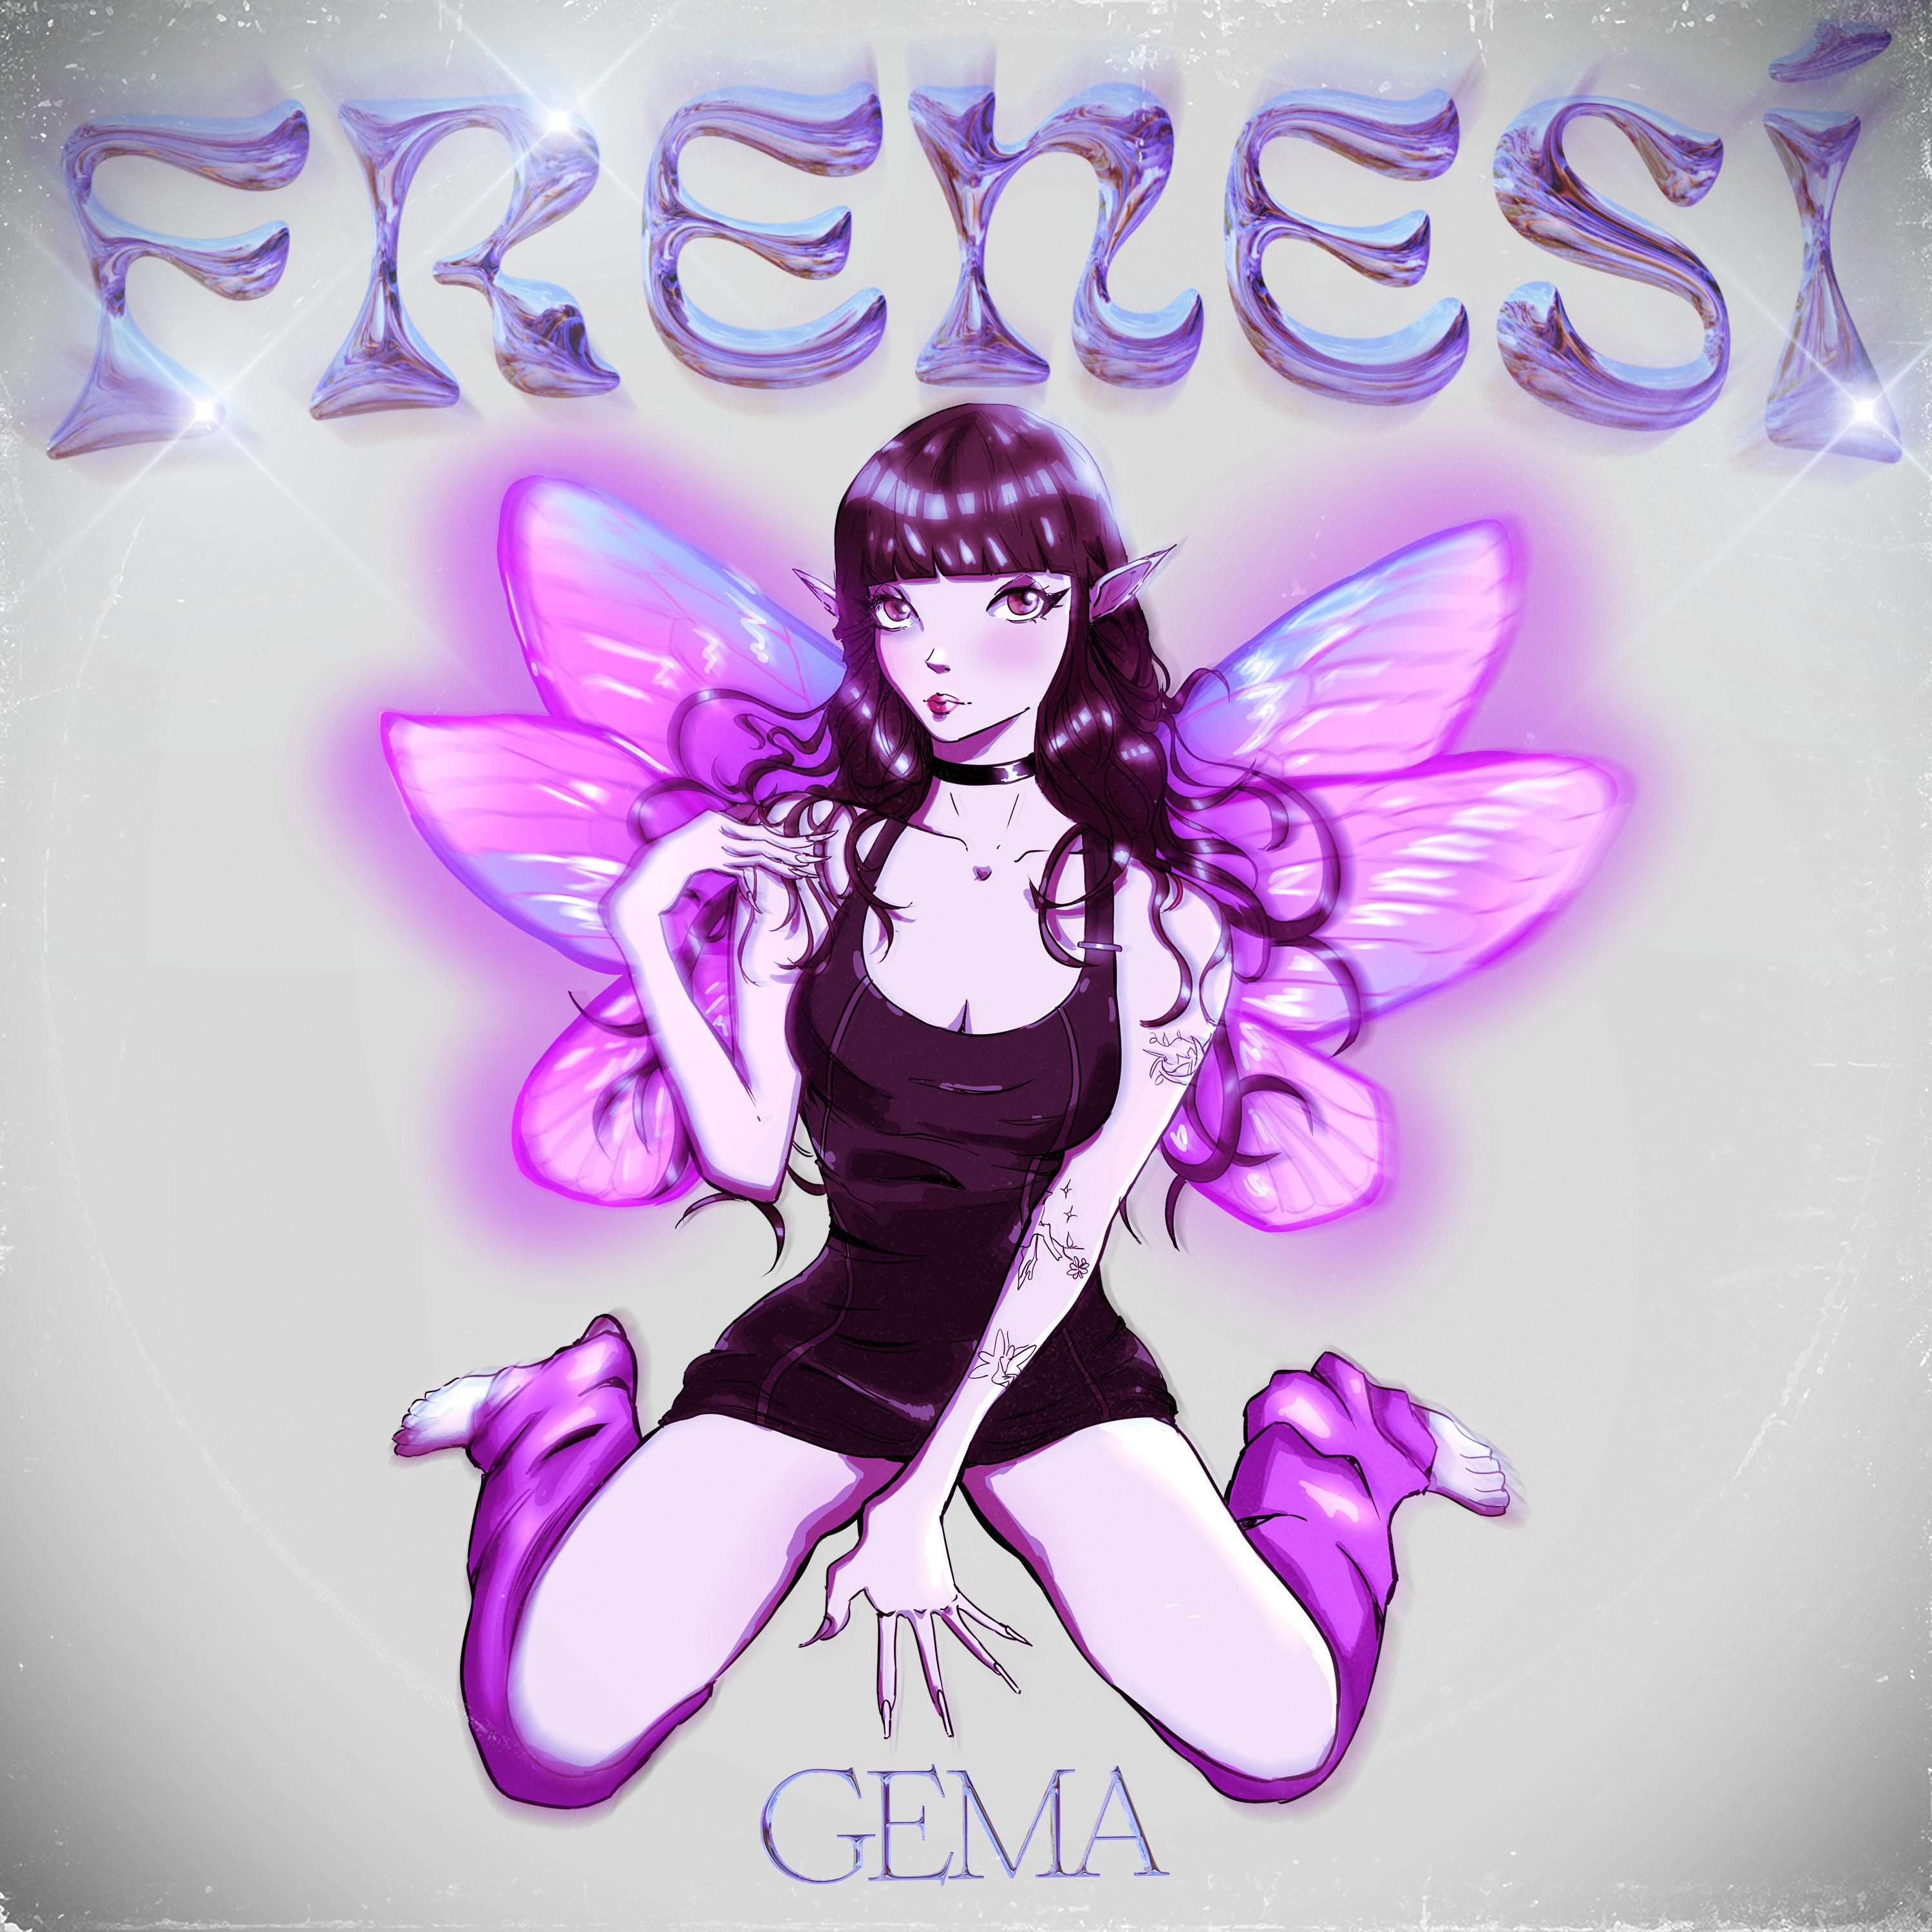 Постер альбома Frenesí